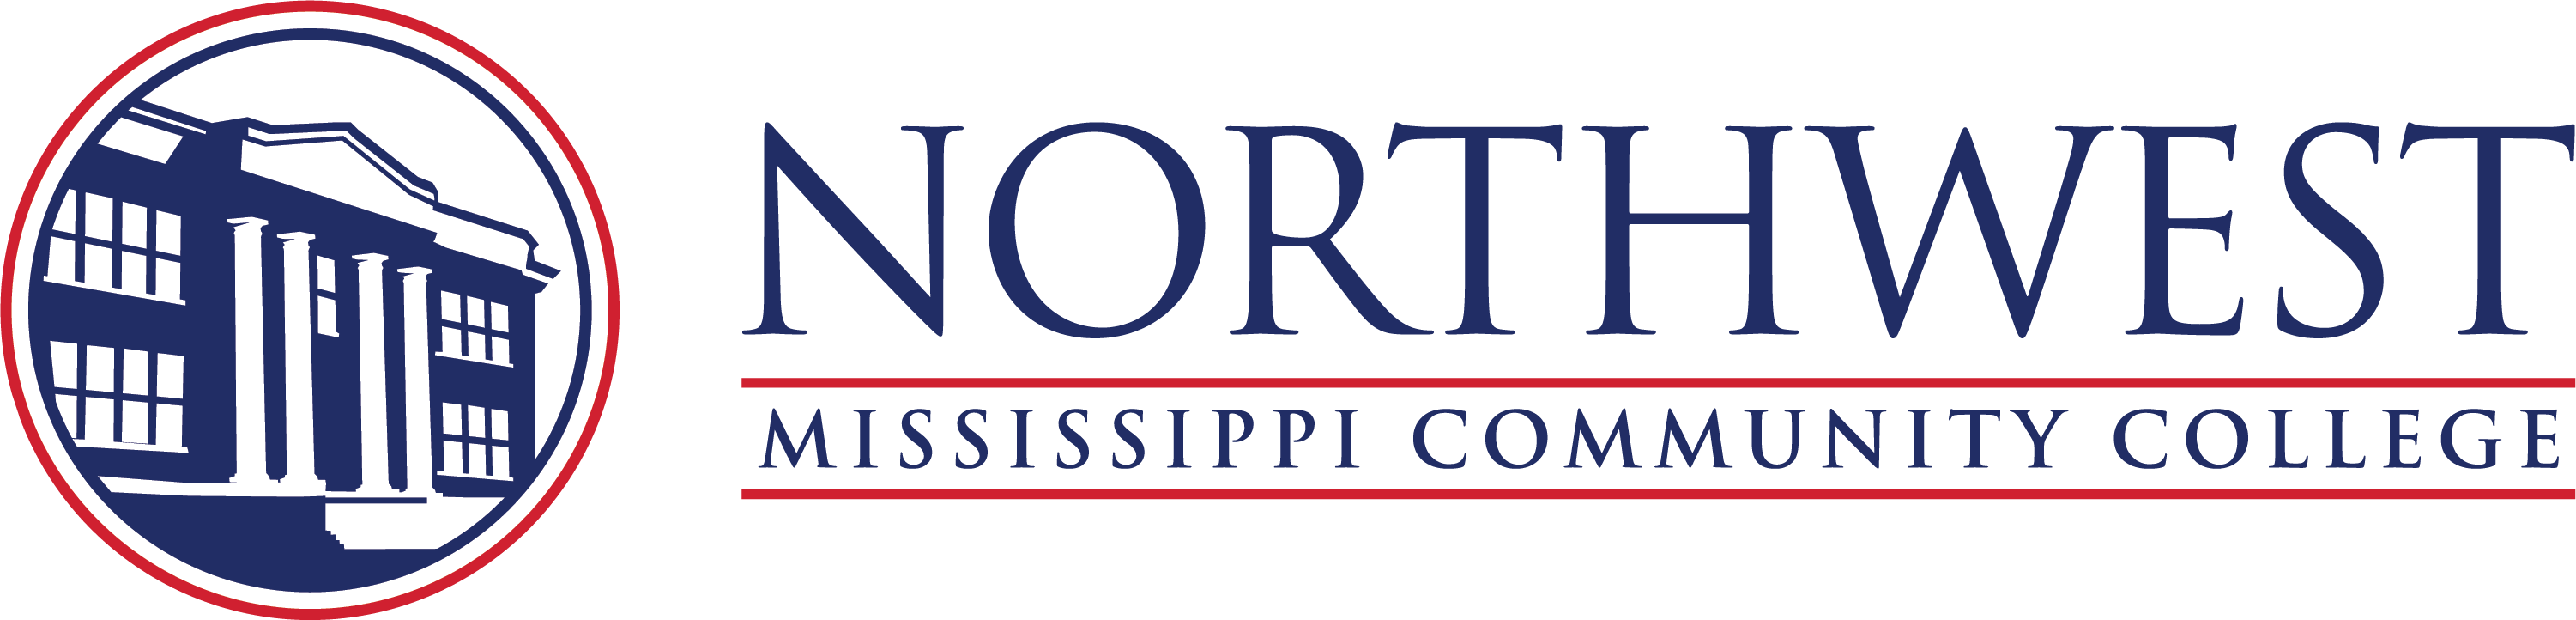 Northwest Mississipp CC logo